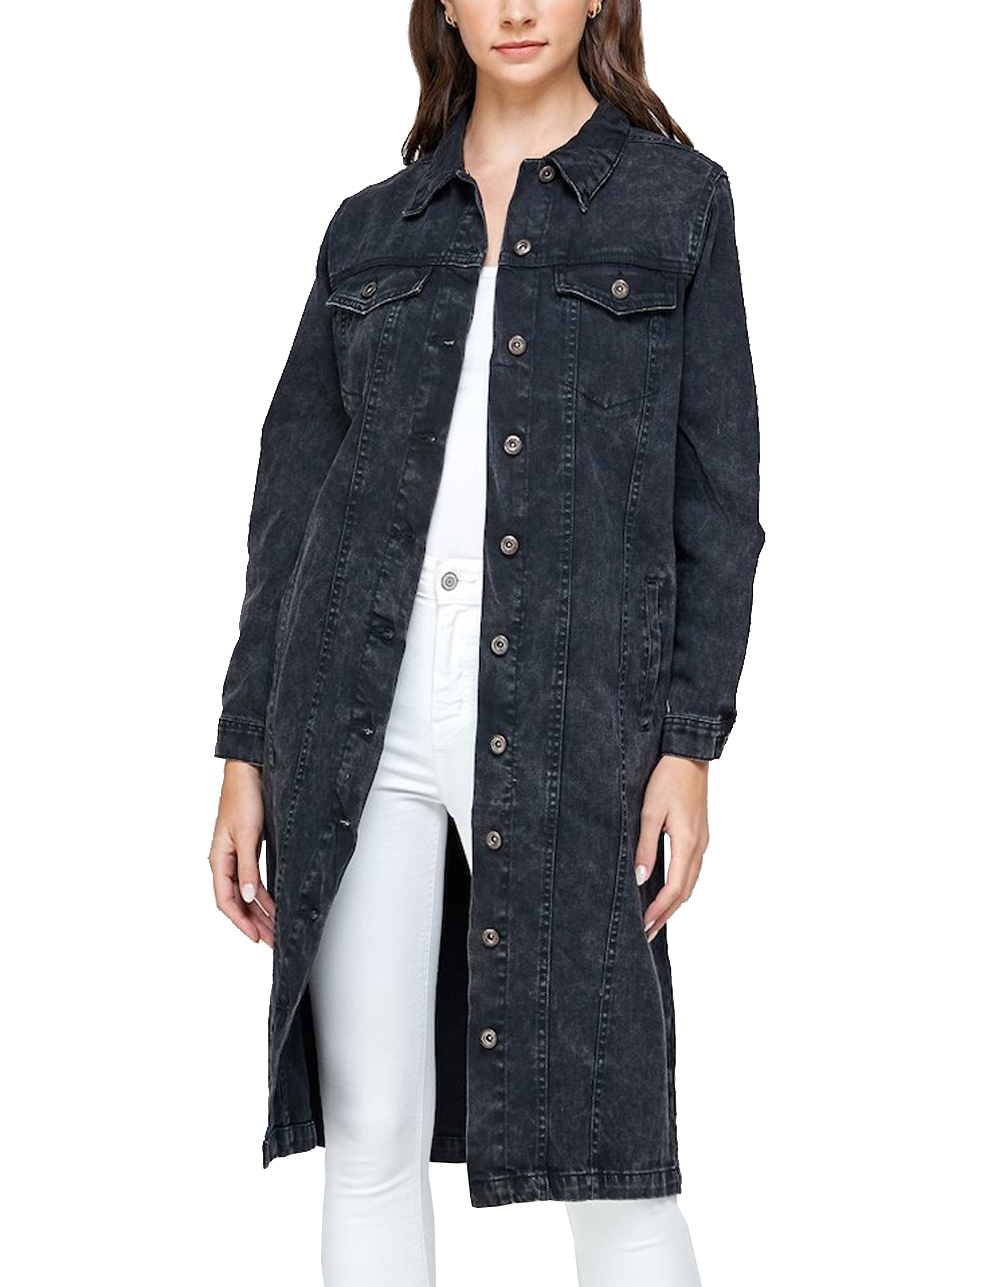 Women's Long Casual Maxi Length Denim Cotton Coat Oversize Button Up Jean Jacket (Mineral Black, S) - image 4 of 6